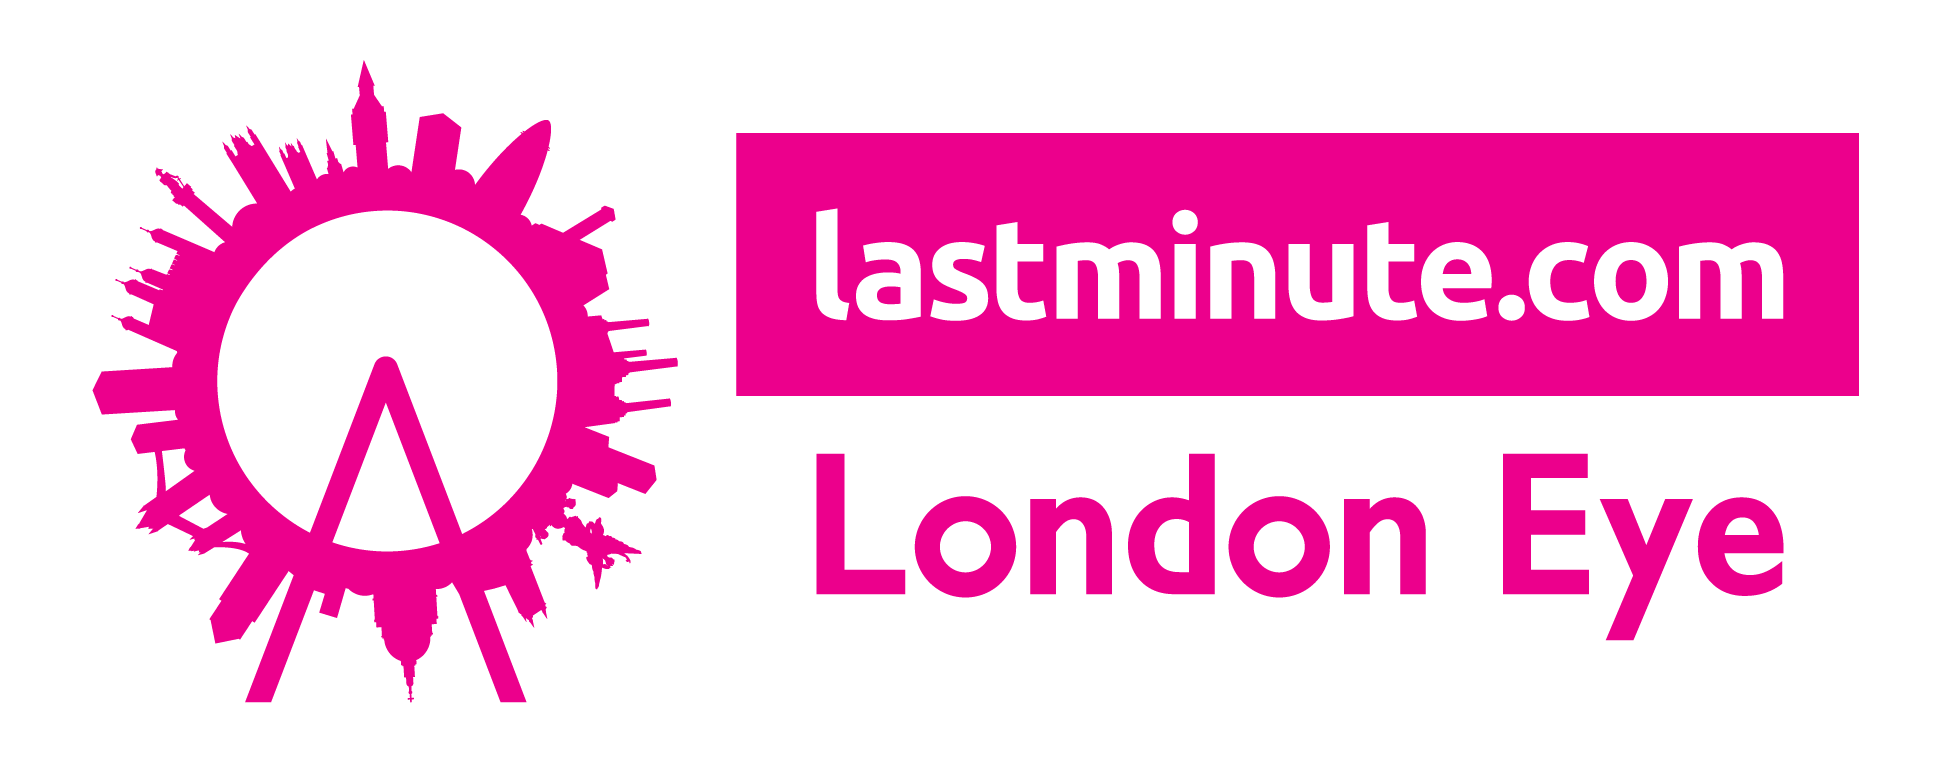 Lastminute.com London Eye logo